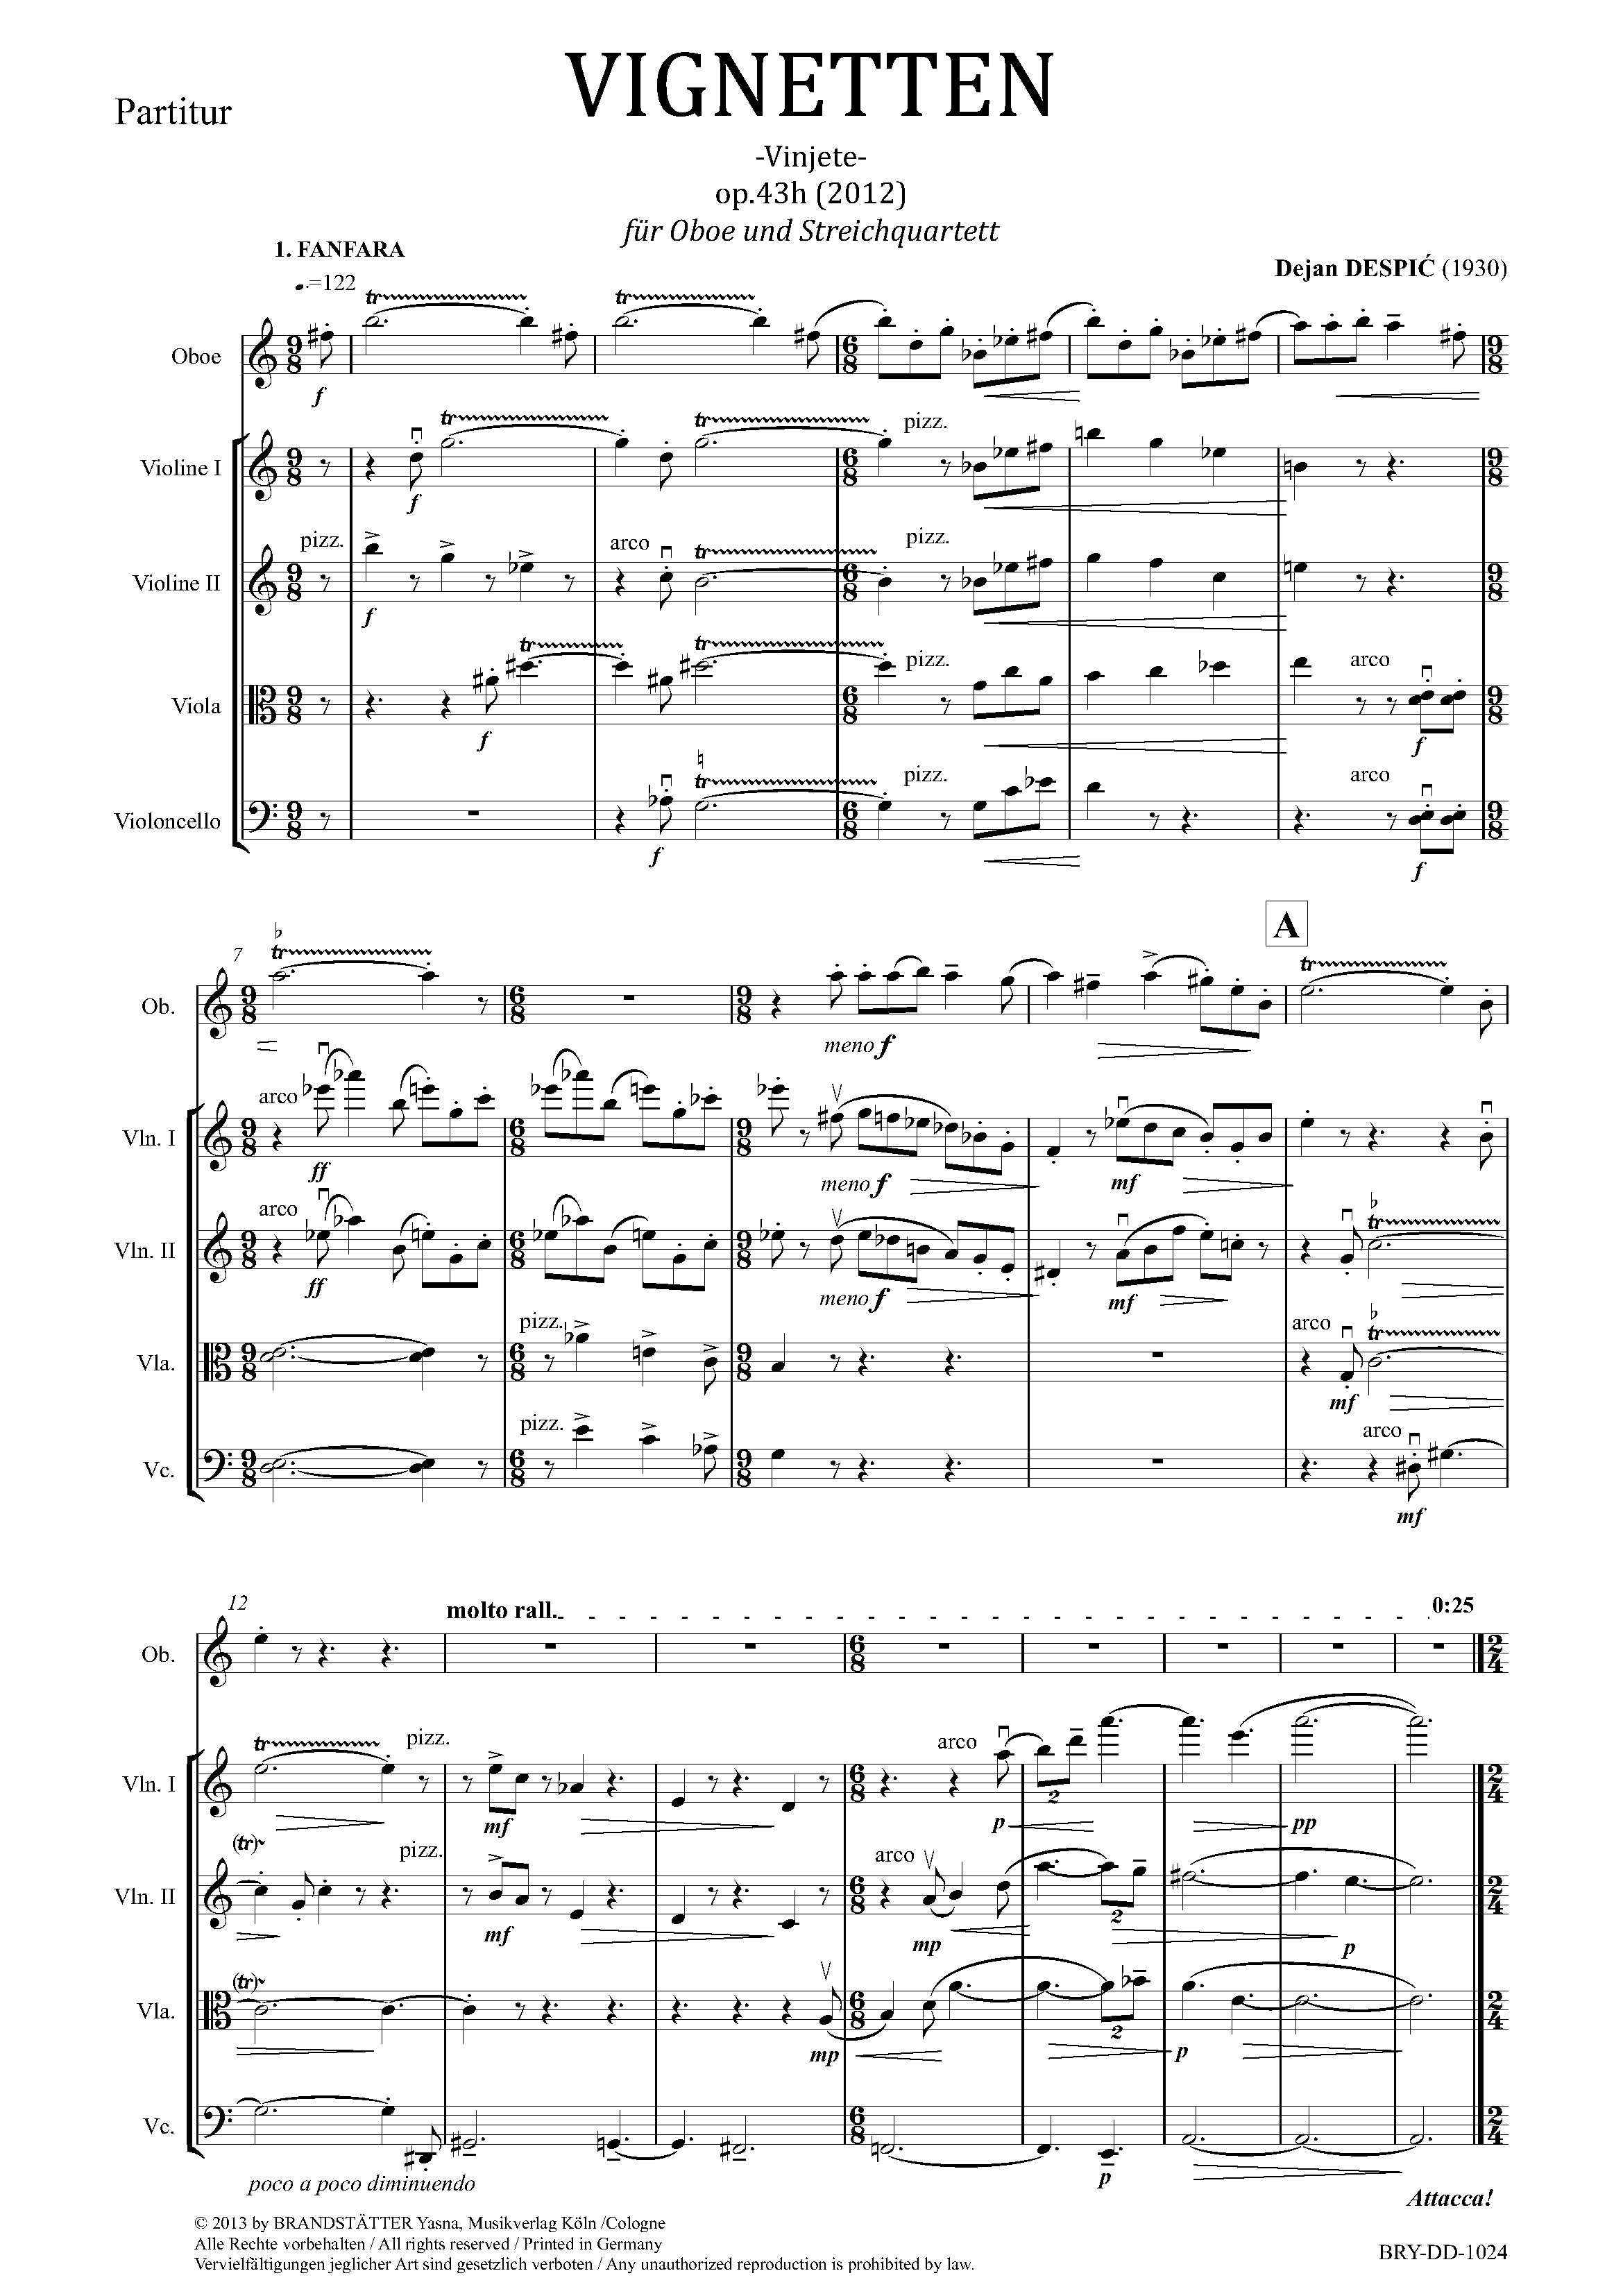 VIGNETTEN Oboe & Streichquartett